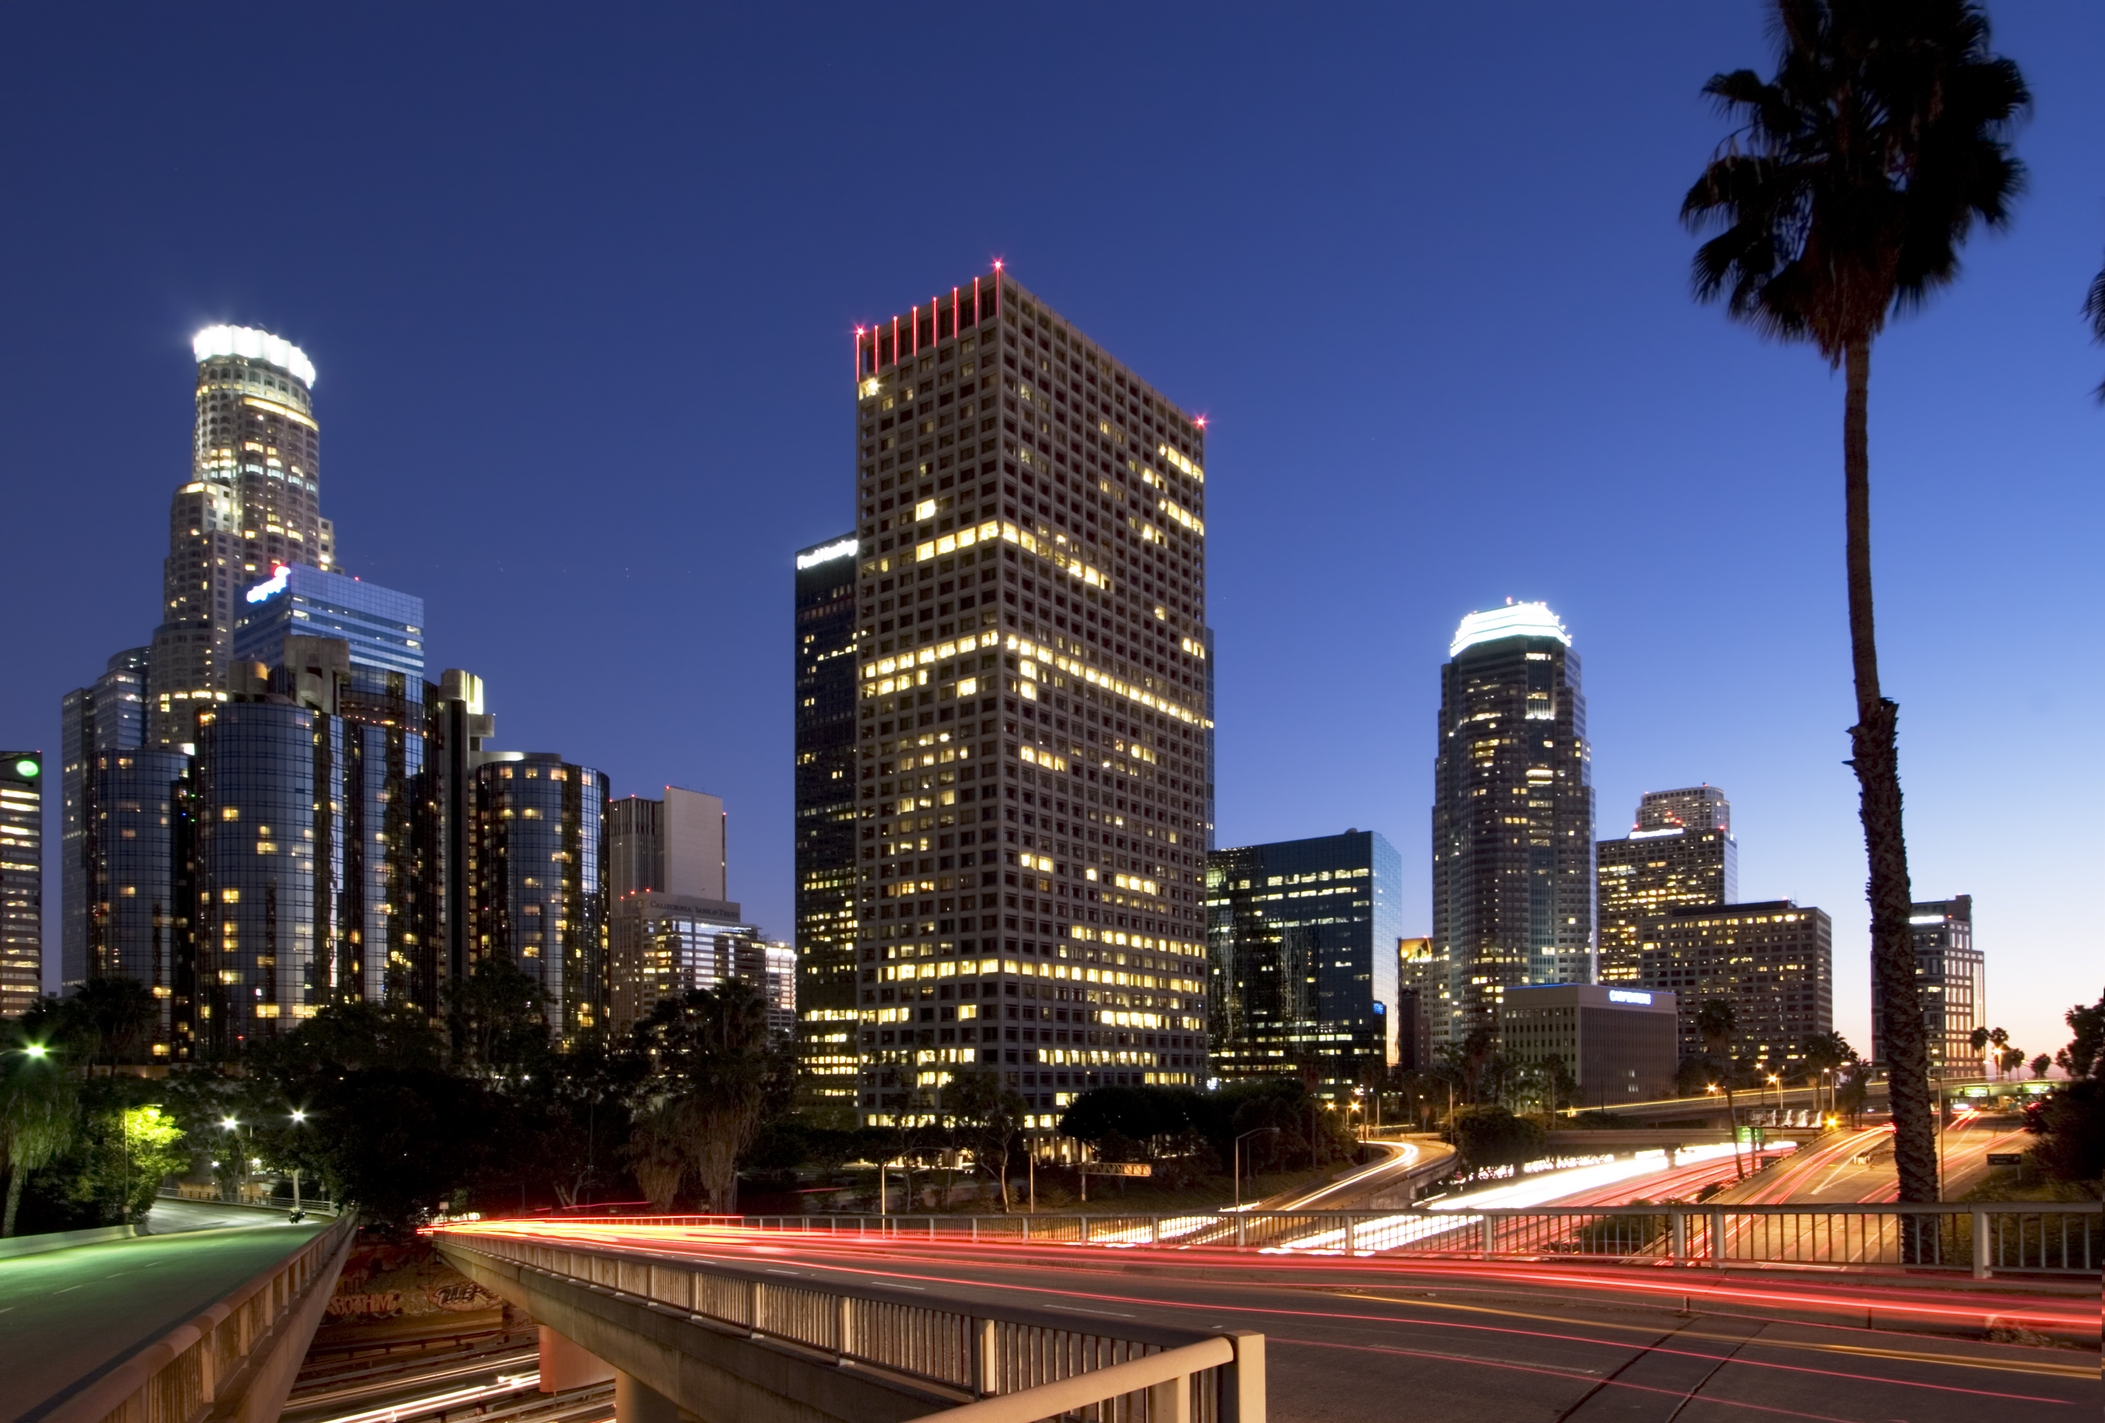 Downtown Los Angeles Skyline Wallpaper